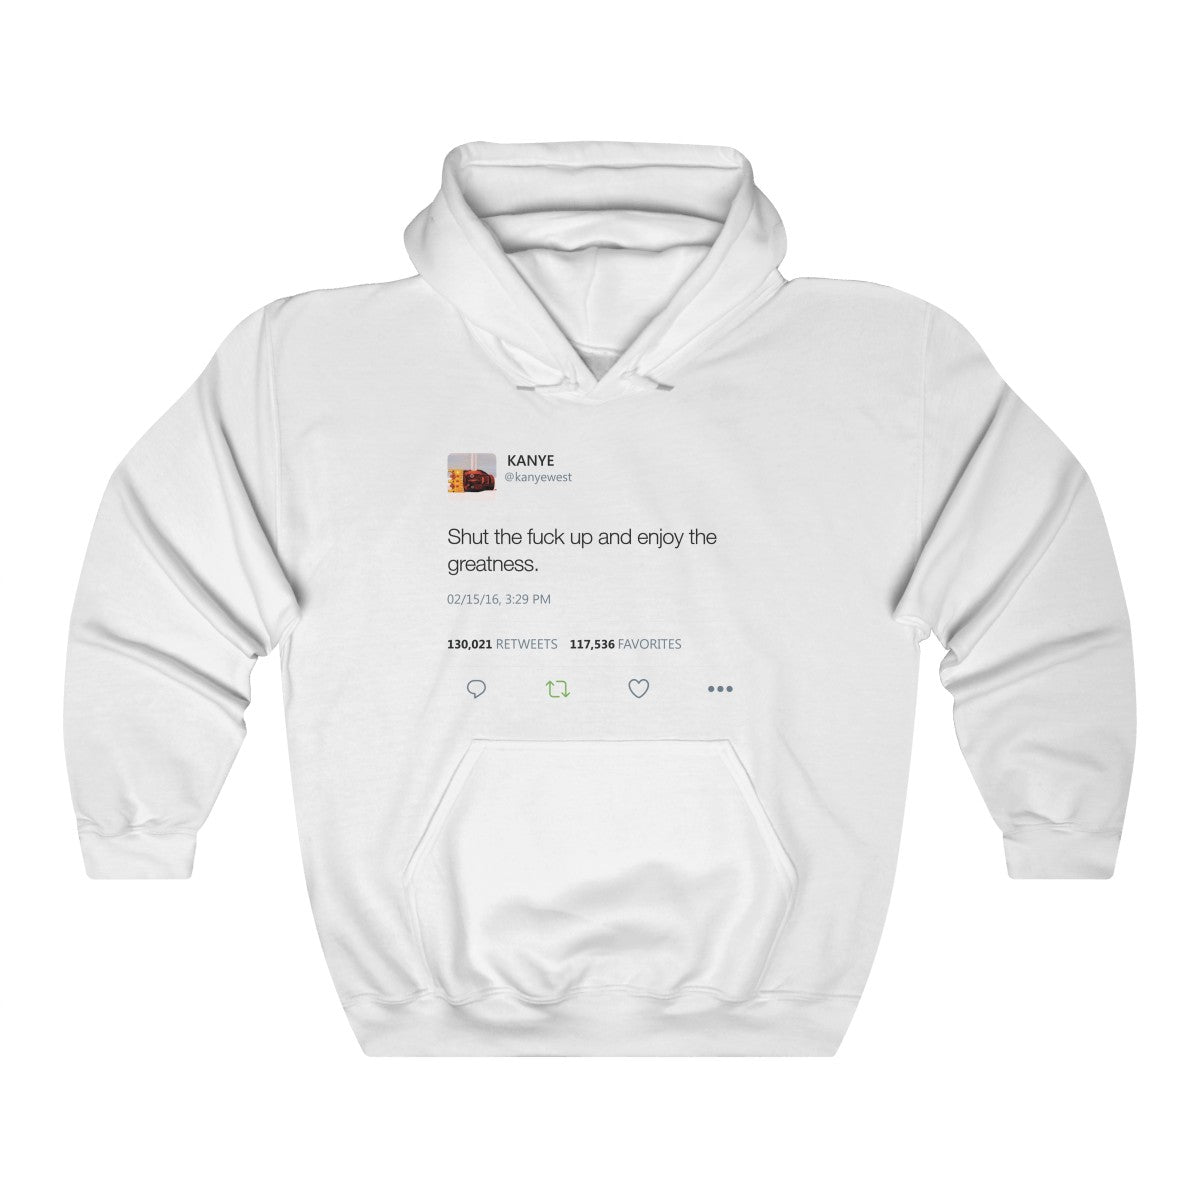 Shut the fuck up and enjoy the greatness - Kanye West Tweet Inspired Unisex Hooded Sweatshirt Hoodie-White-L-Archethype